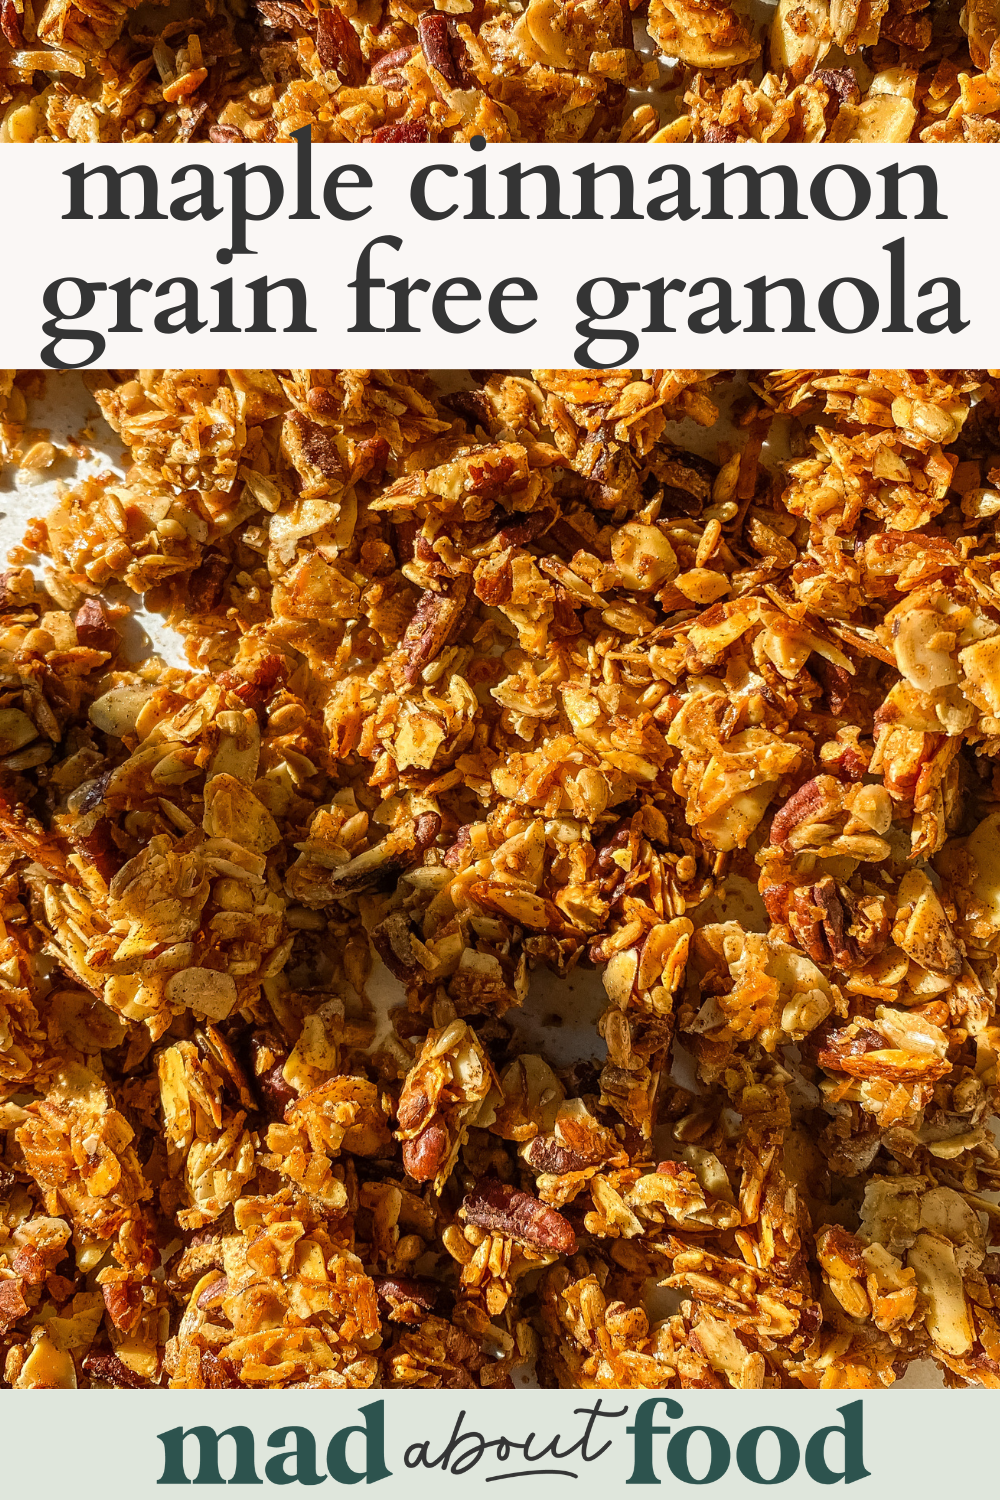 Image for pinning maple cinnamon grain free granola recipe on Pinterest